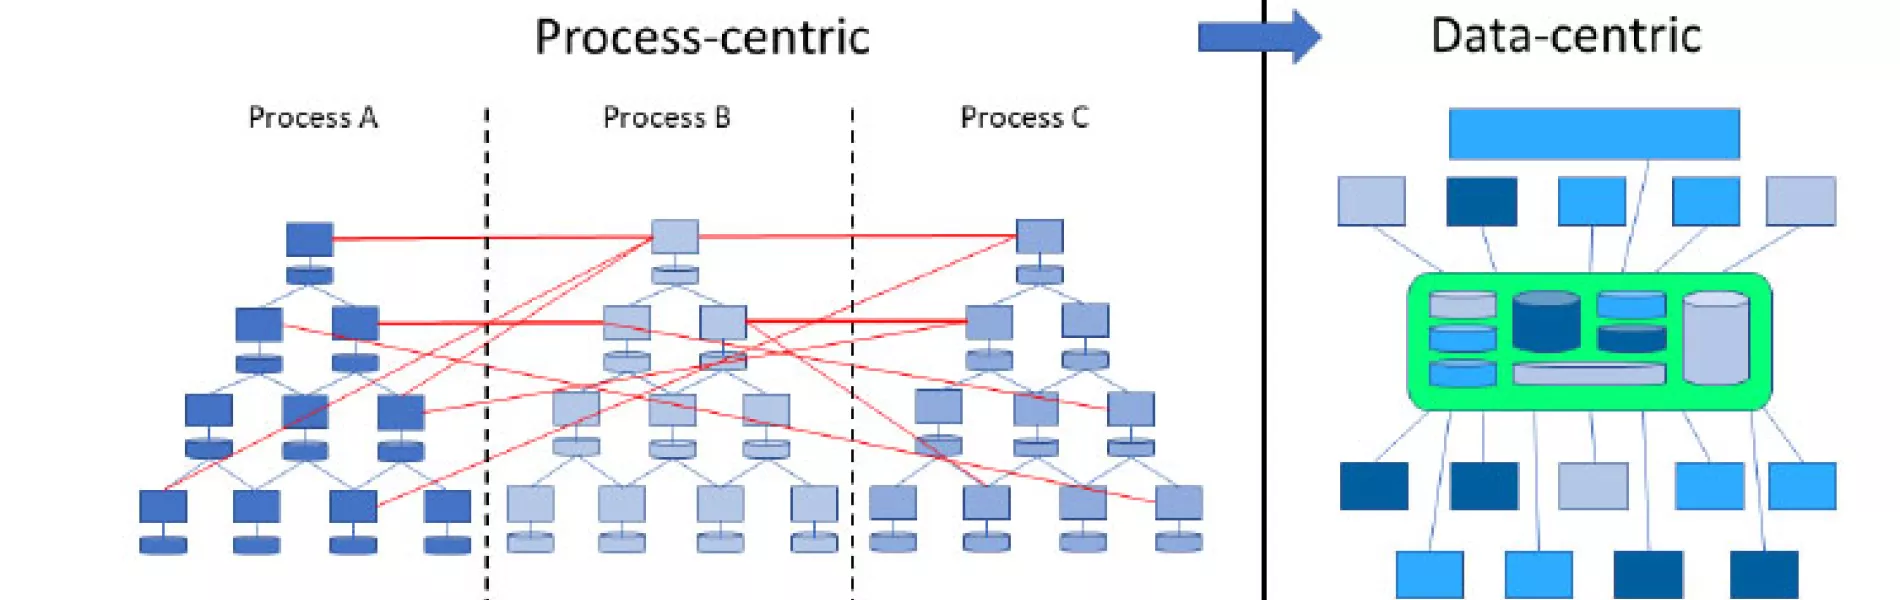 Figure 1: Process-centric vs. data-centric approach.